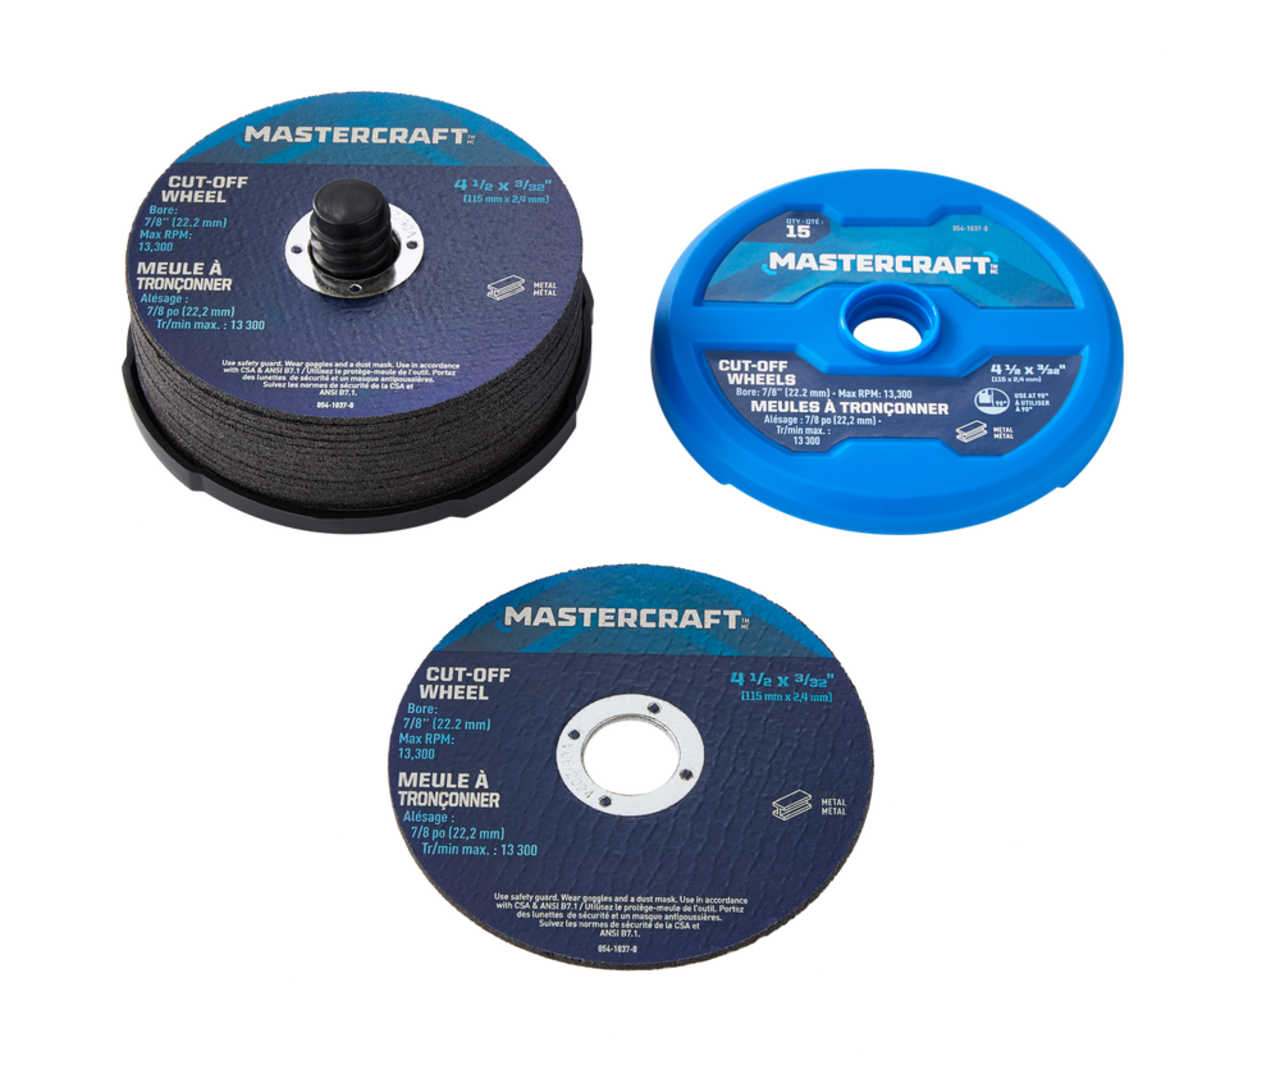 MAXIMUM Type 27 Aluminum Oxide Grinding Wheel/Disc for Metal